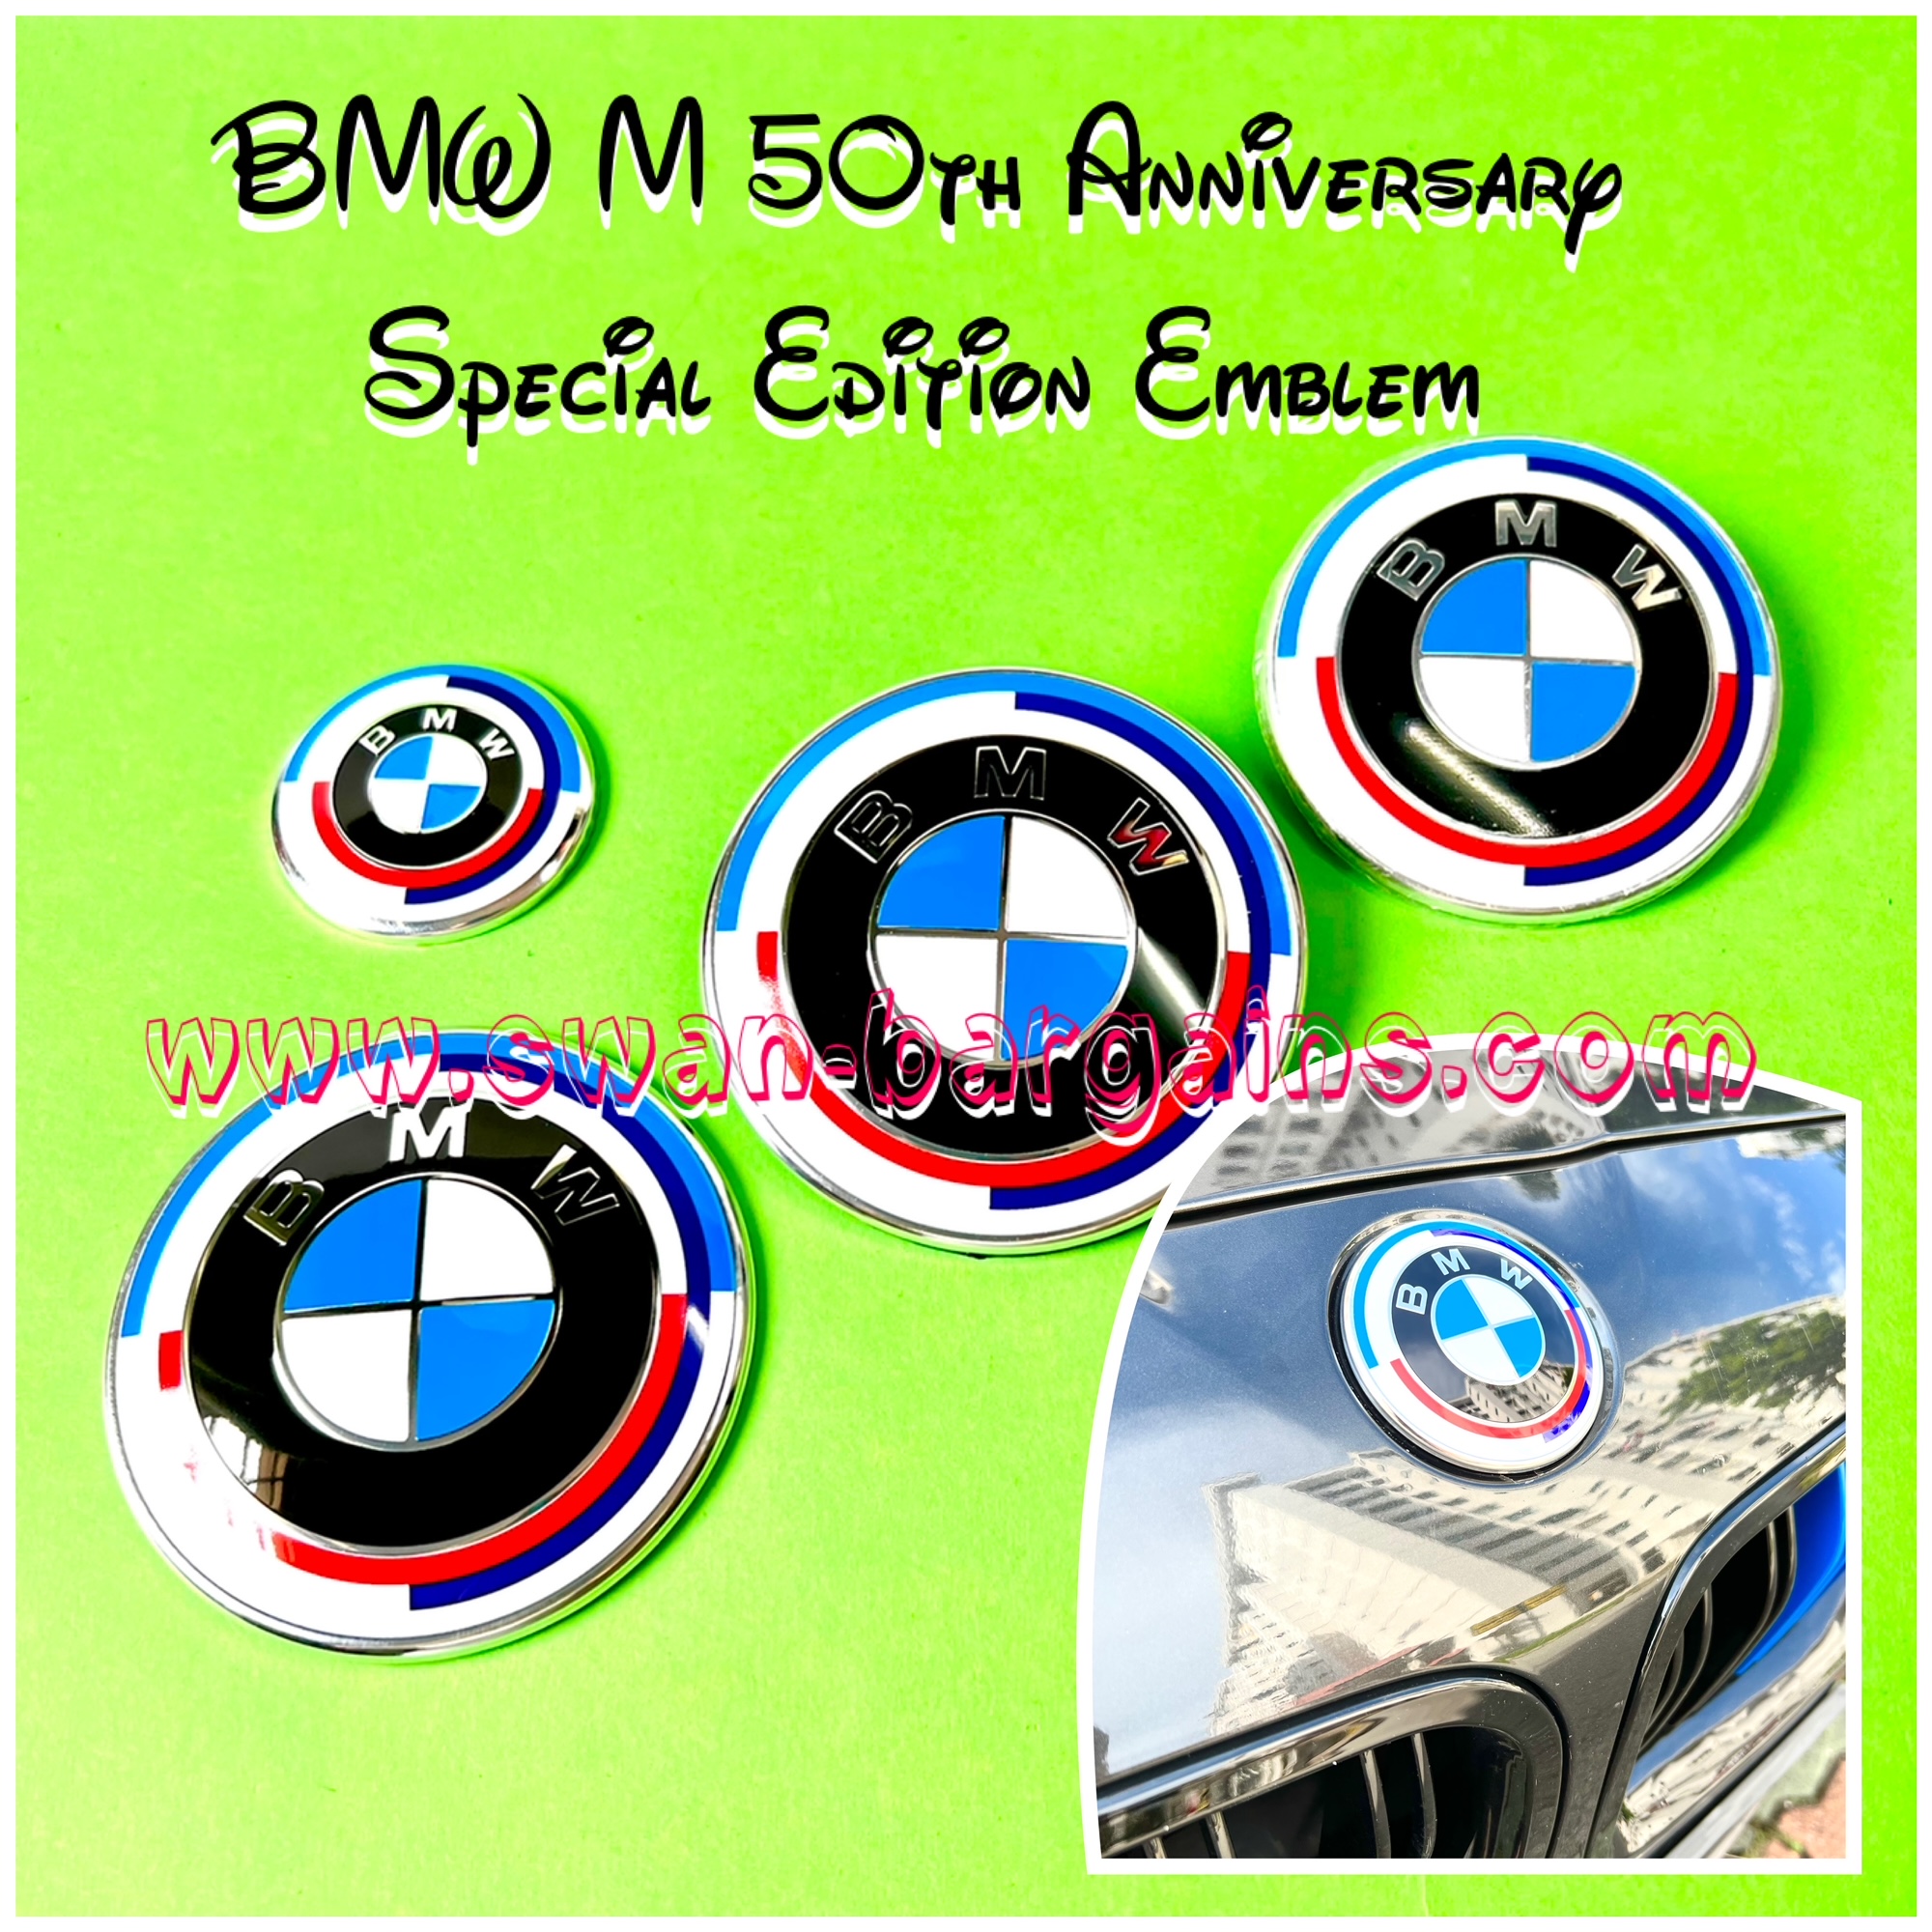 https://swan-bargains.com/wp-content/uploads/BMW-M-50th-Anniversary-Special-Edition-Emblem-Singapore.jpg